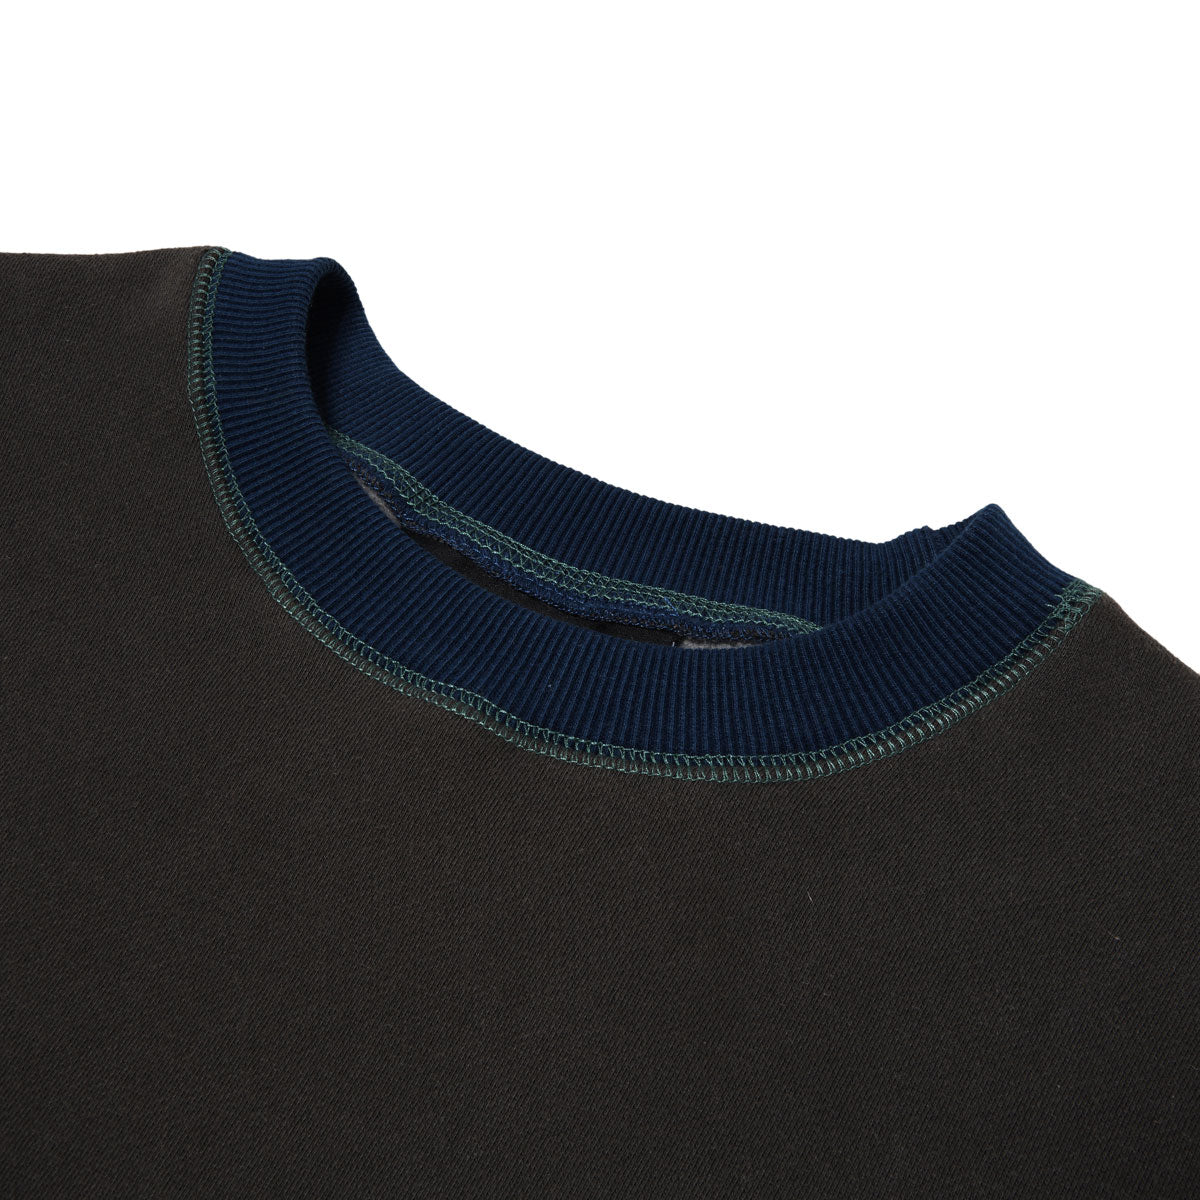 WKND Pigment Jumper Sweatshirt - Black image 4